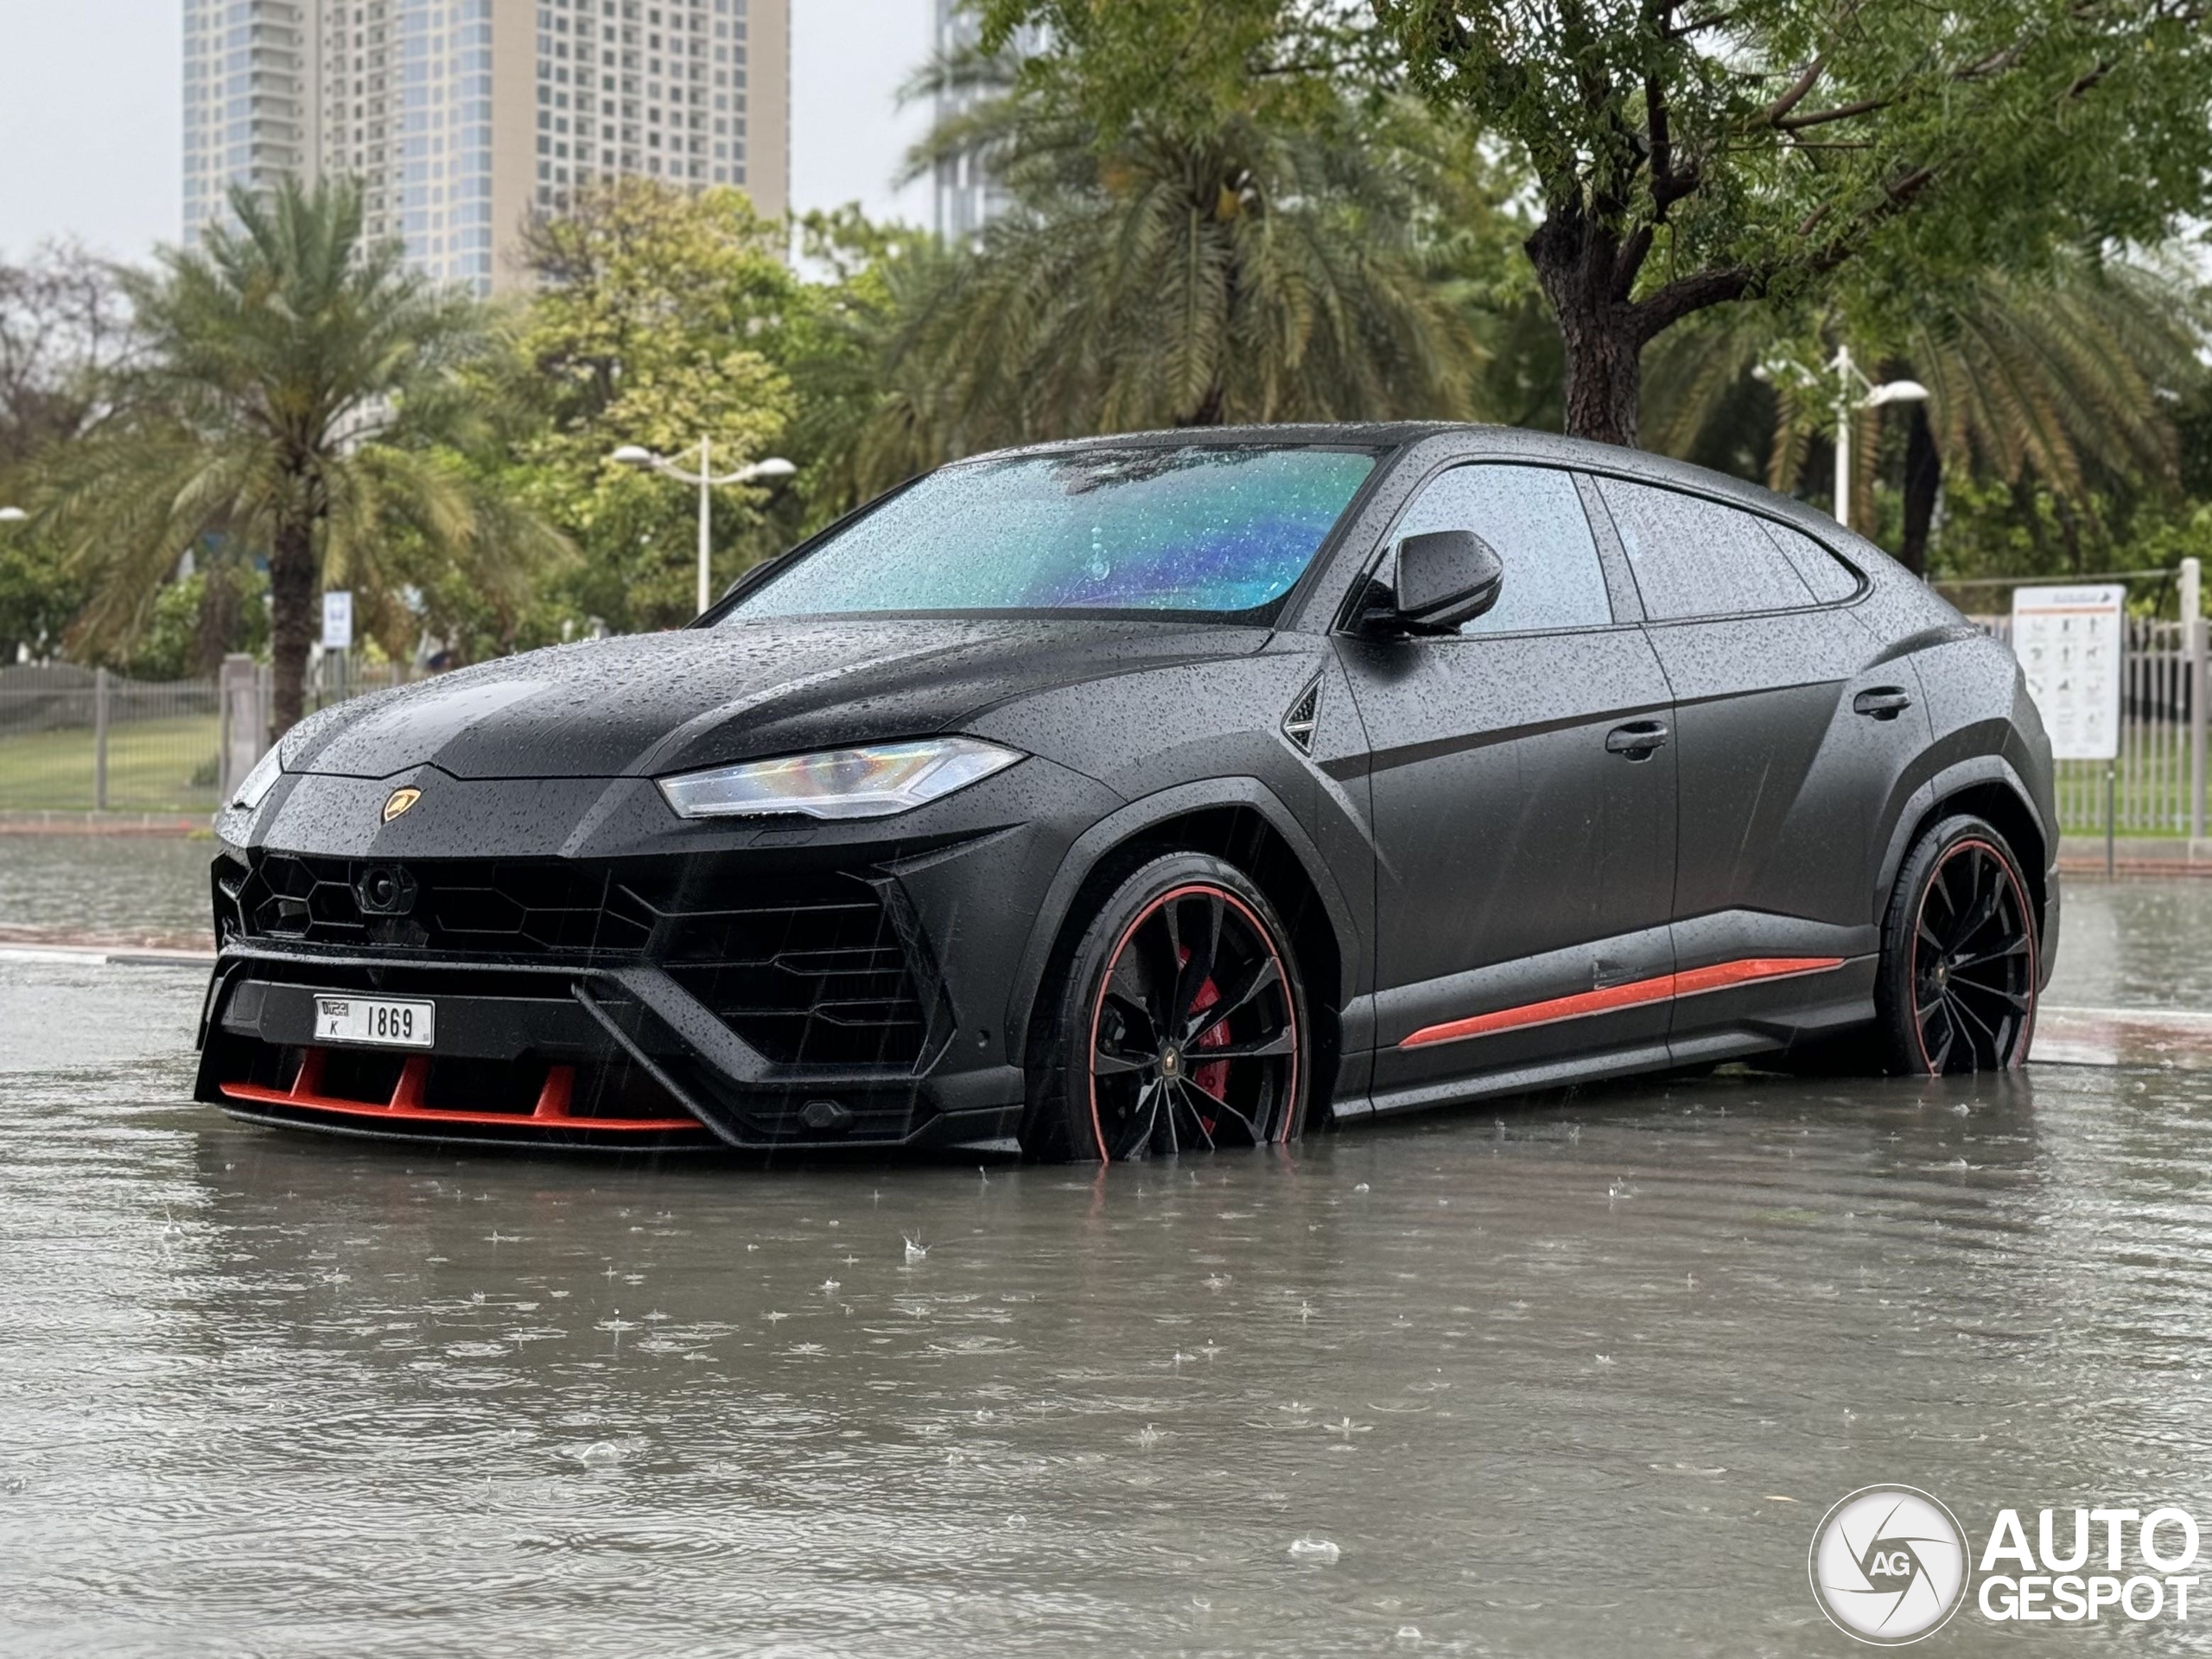 Dubai‘s flooded streets: Urus takes a bath